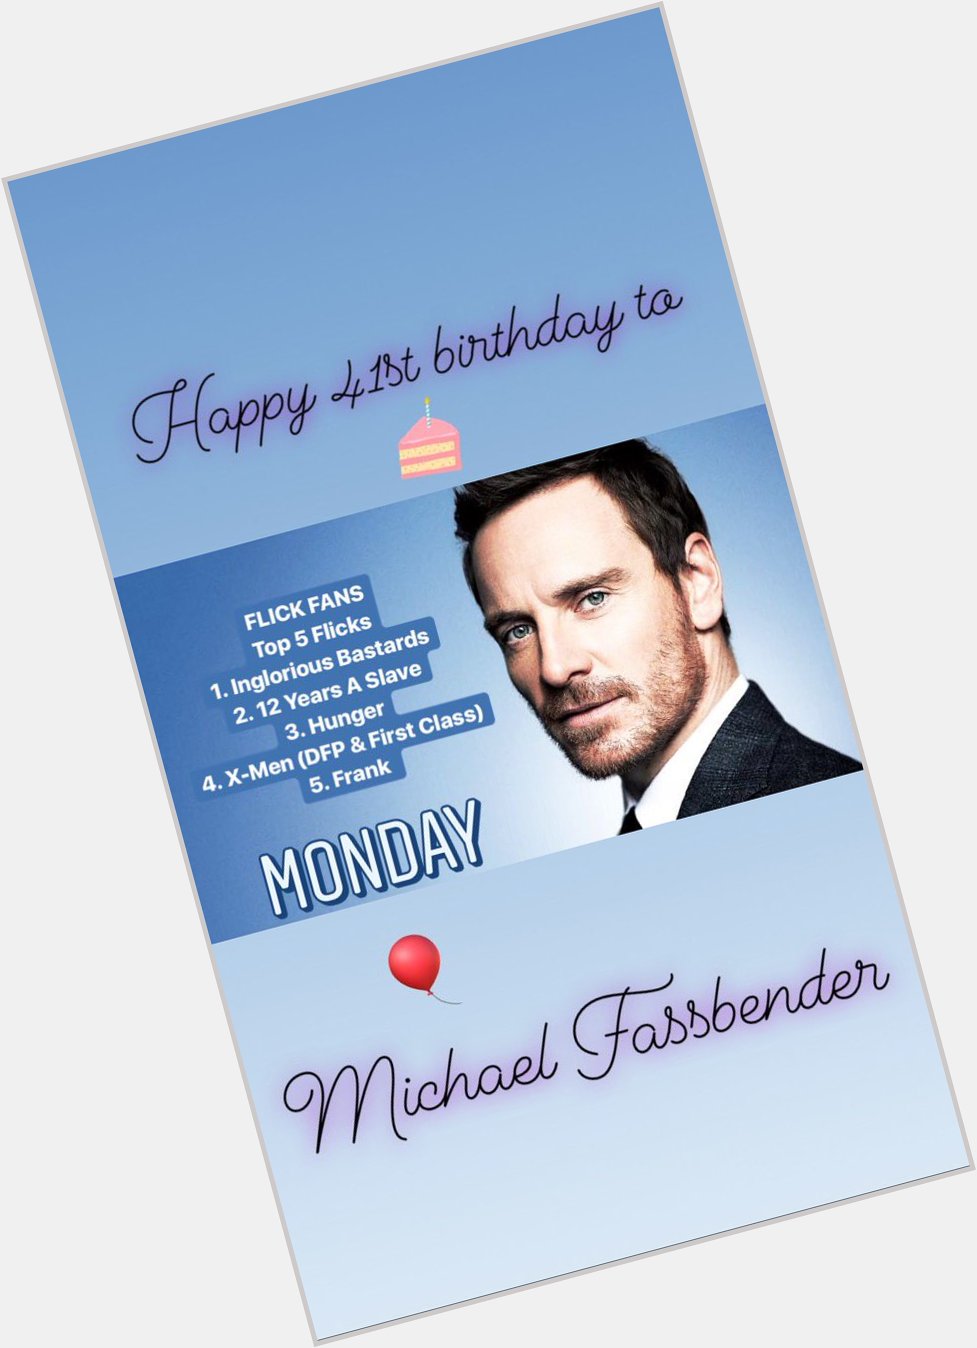 Happy birthday Michael Fassbender! 